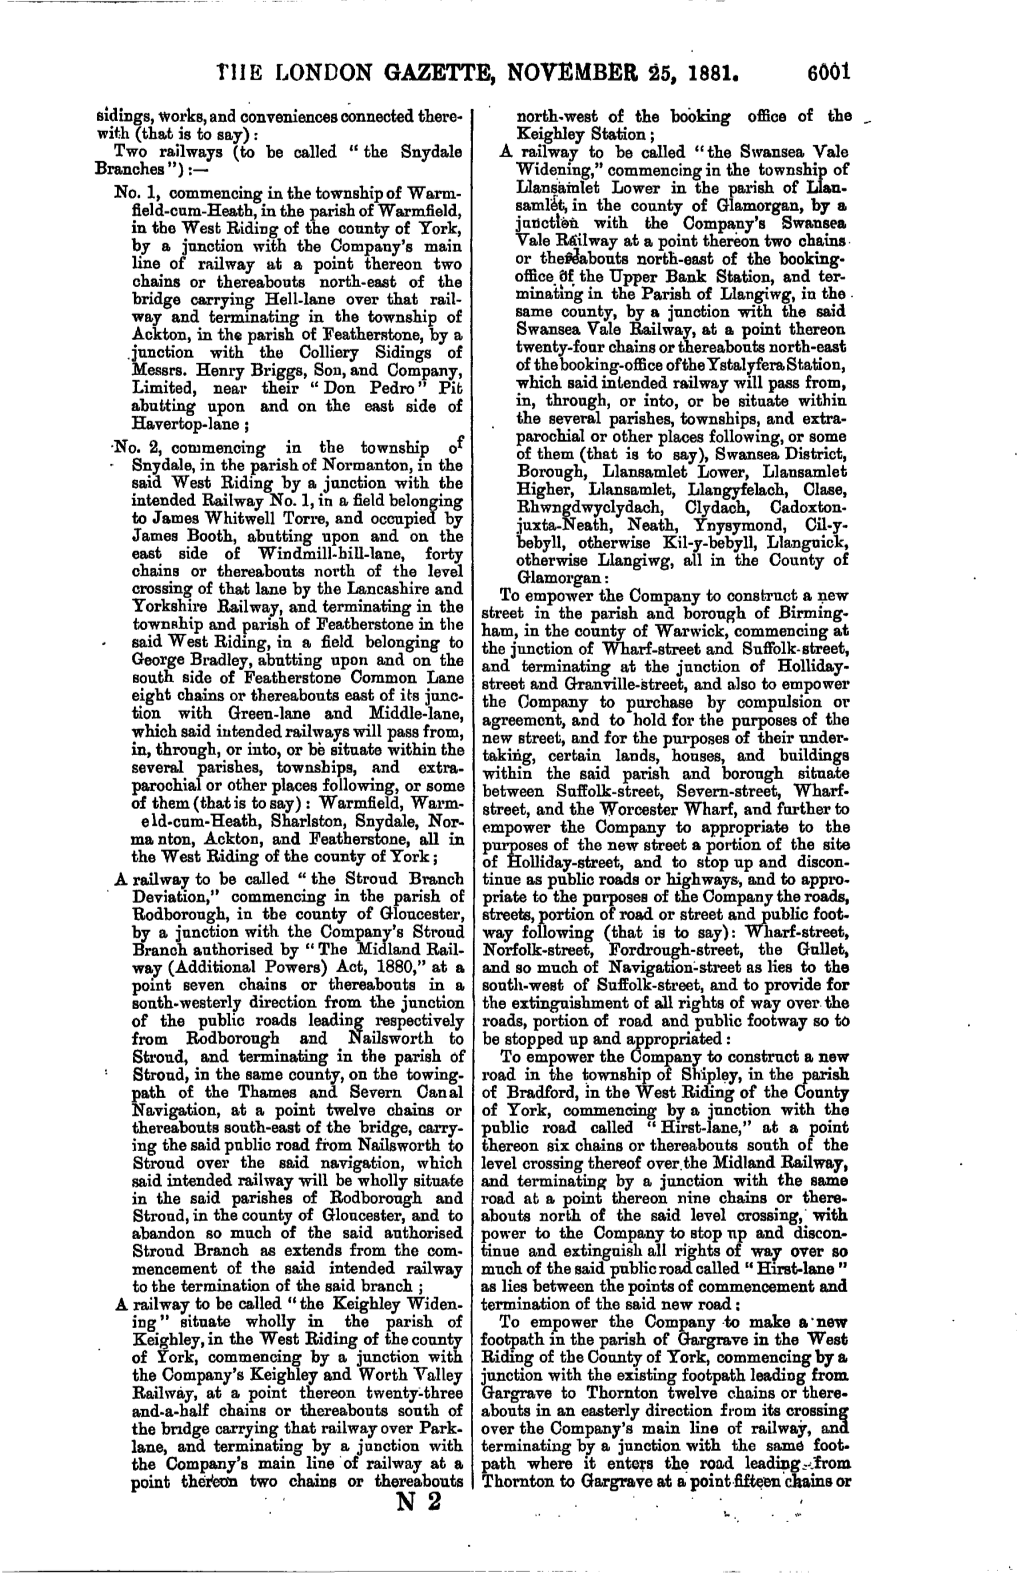 The London Gazette, November 25, 1881. 6001